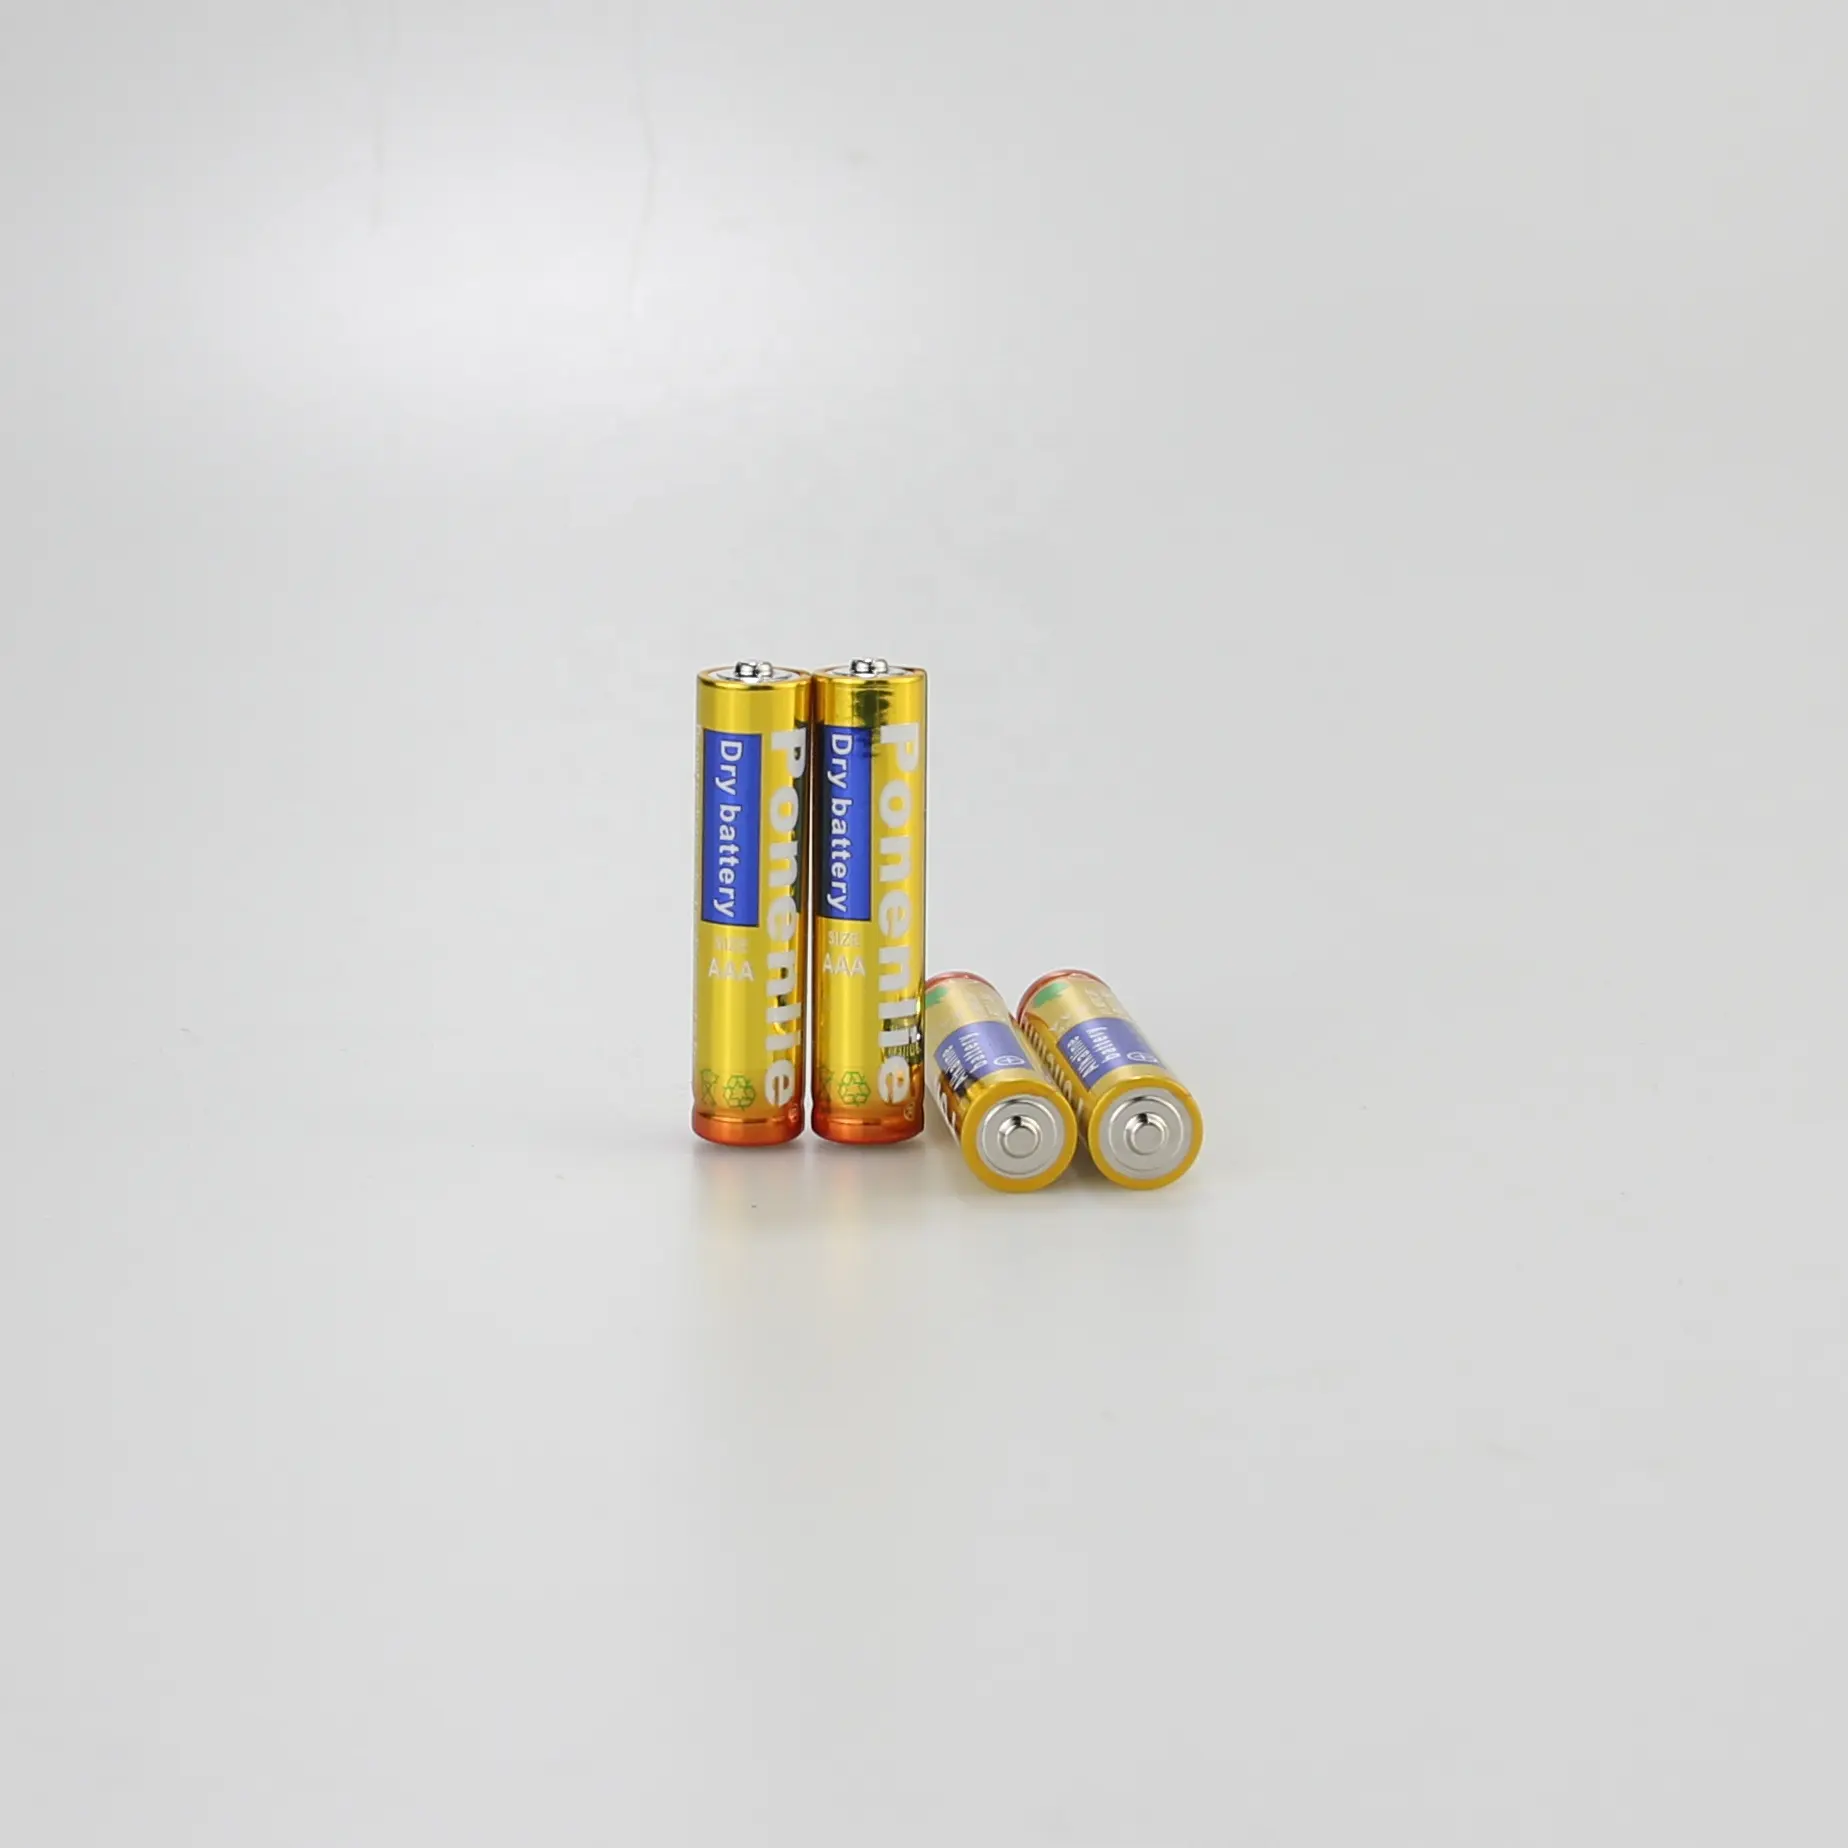 Uholan all'ingrosso LR6 alcalina 5 batteria AA 1.5v batteria alcalina prezzo basso giocattoli Mouse senza fili